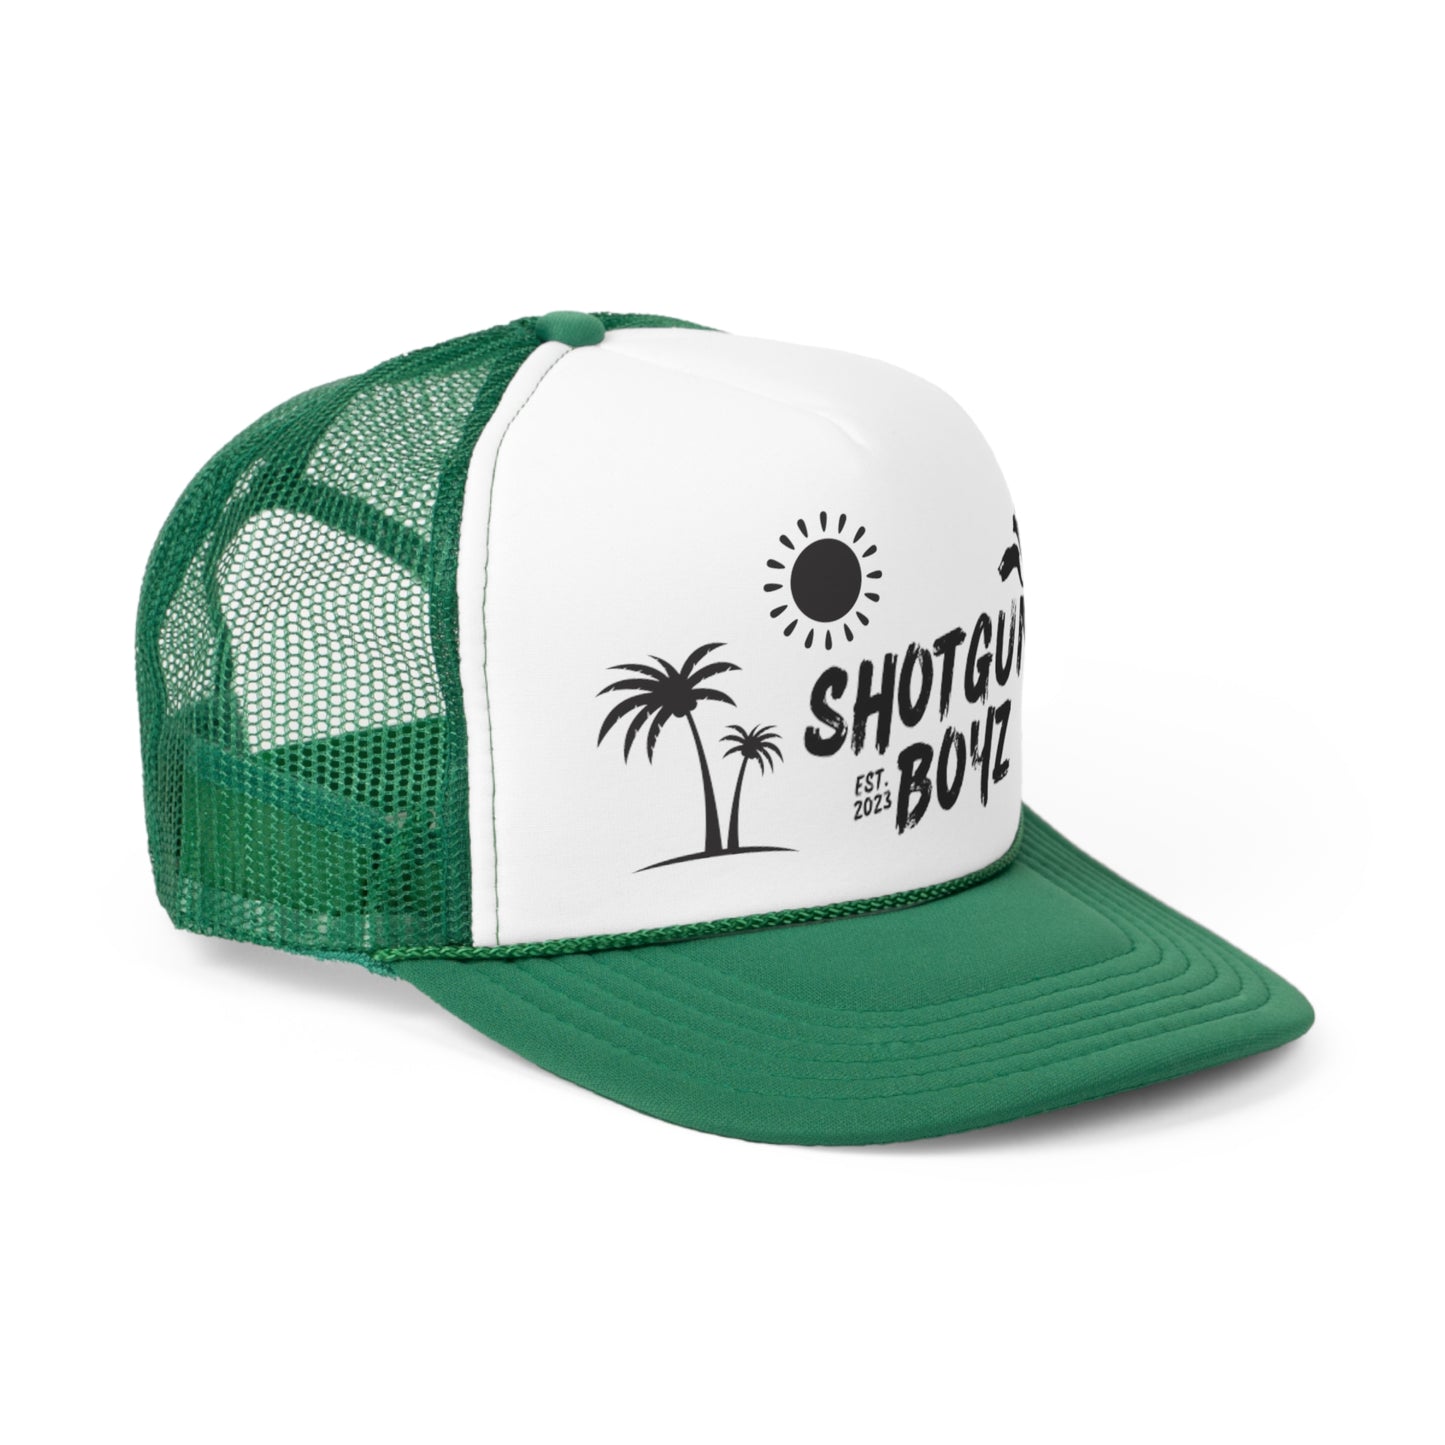 Shotgunboyz "Summer" Trucker Hat